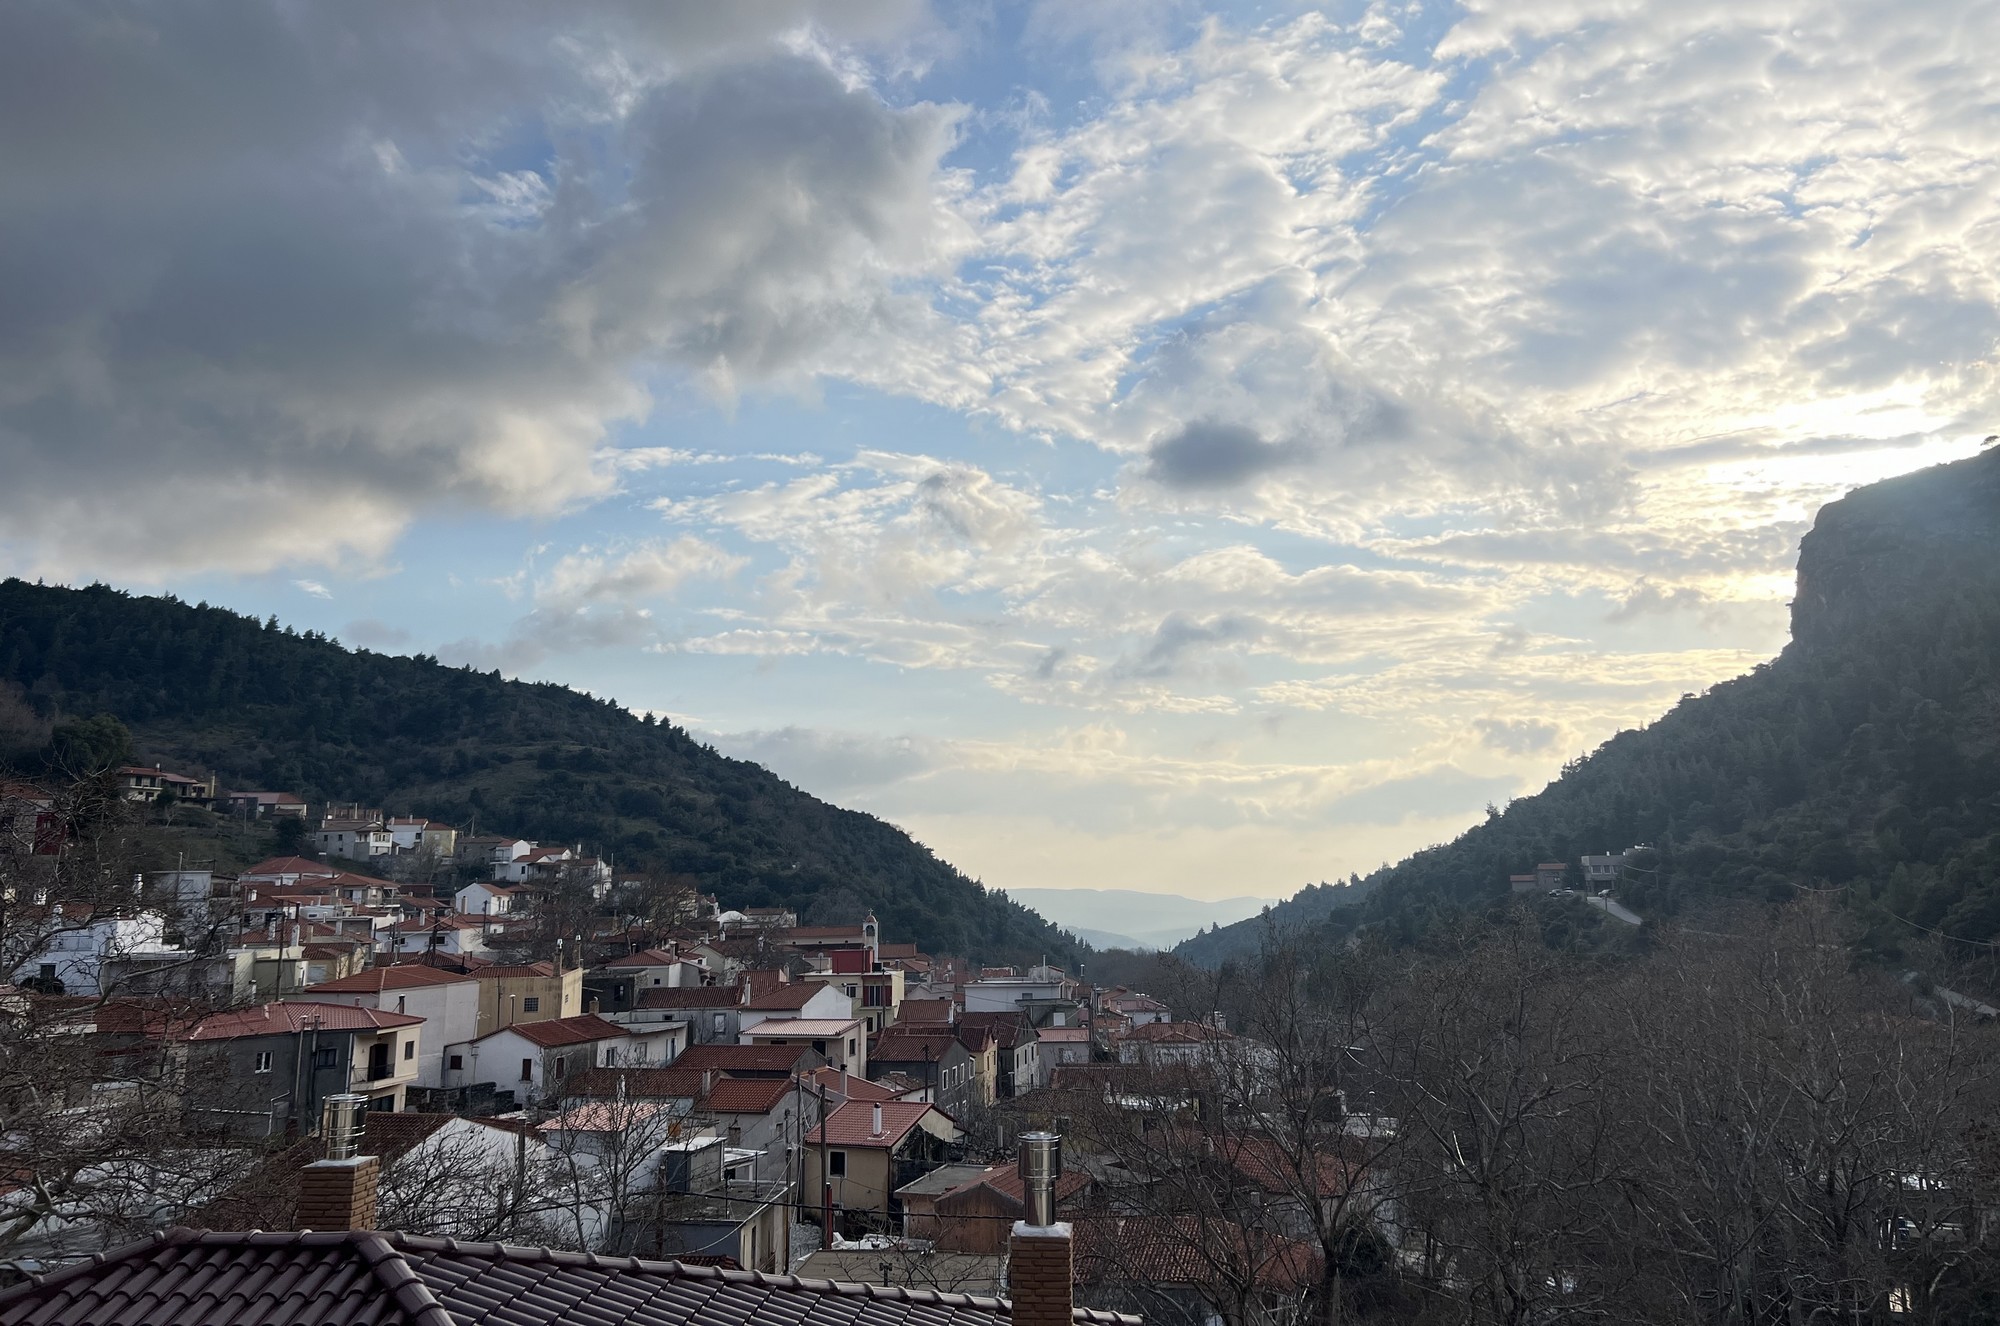 Slow Travel: Ένας κρυφός παράδεισος μόλις μια ώρα από την Αθήνα
